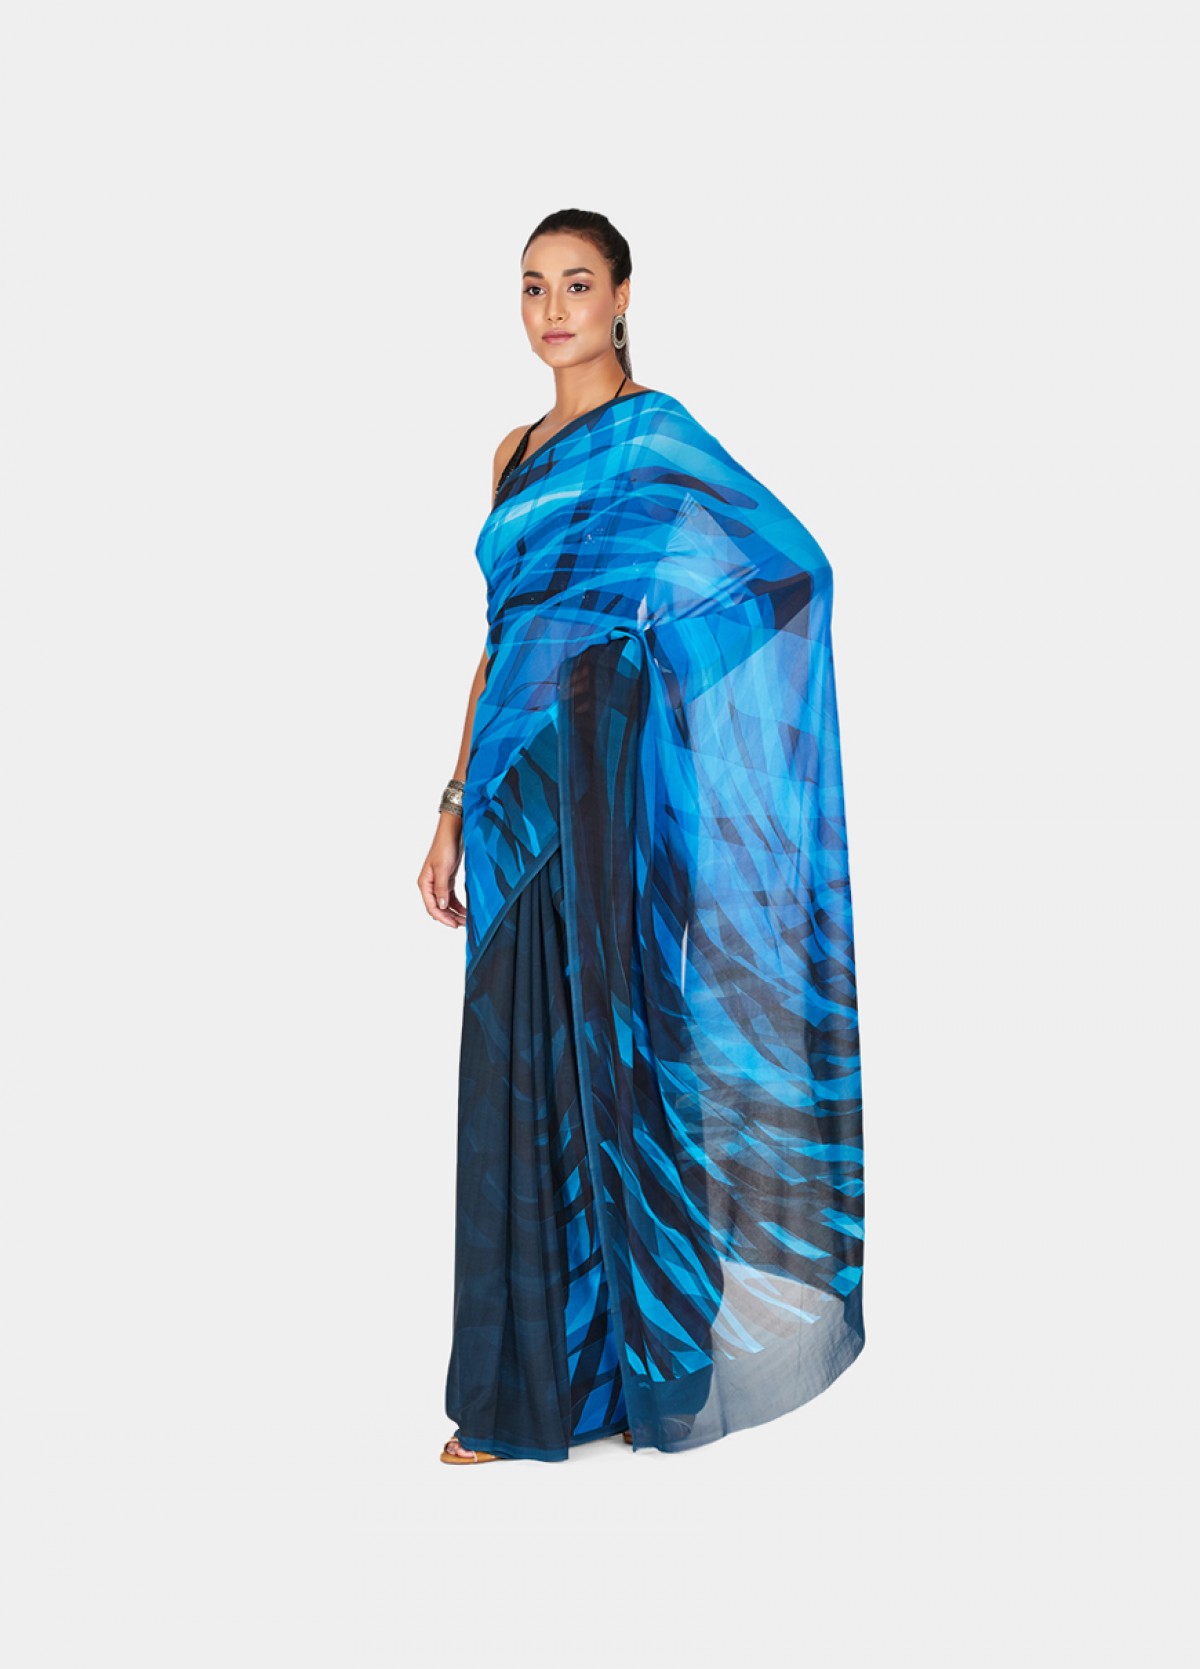 The Ethereal Sari